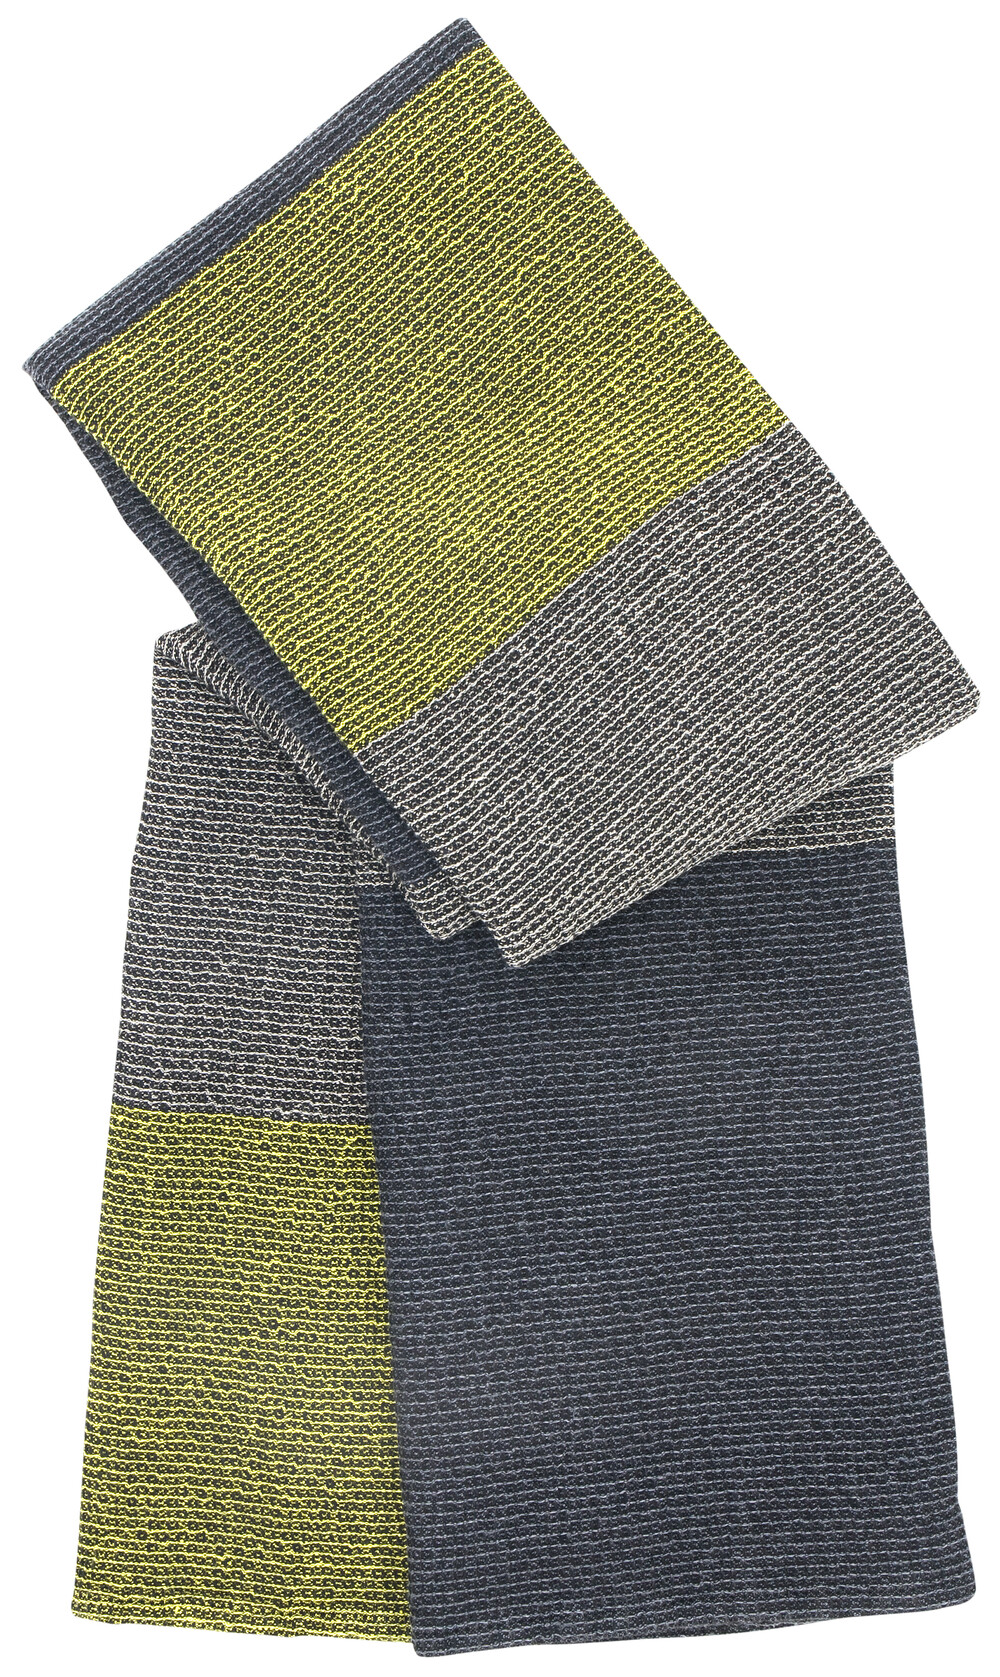 TERVA towel 85x180cm black-multi-yellow | Lapuan Kankurit